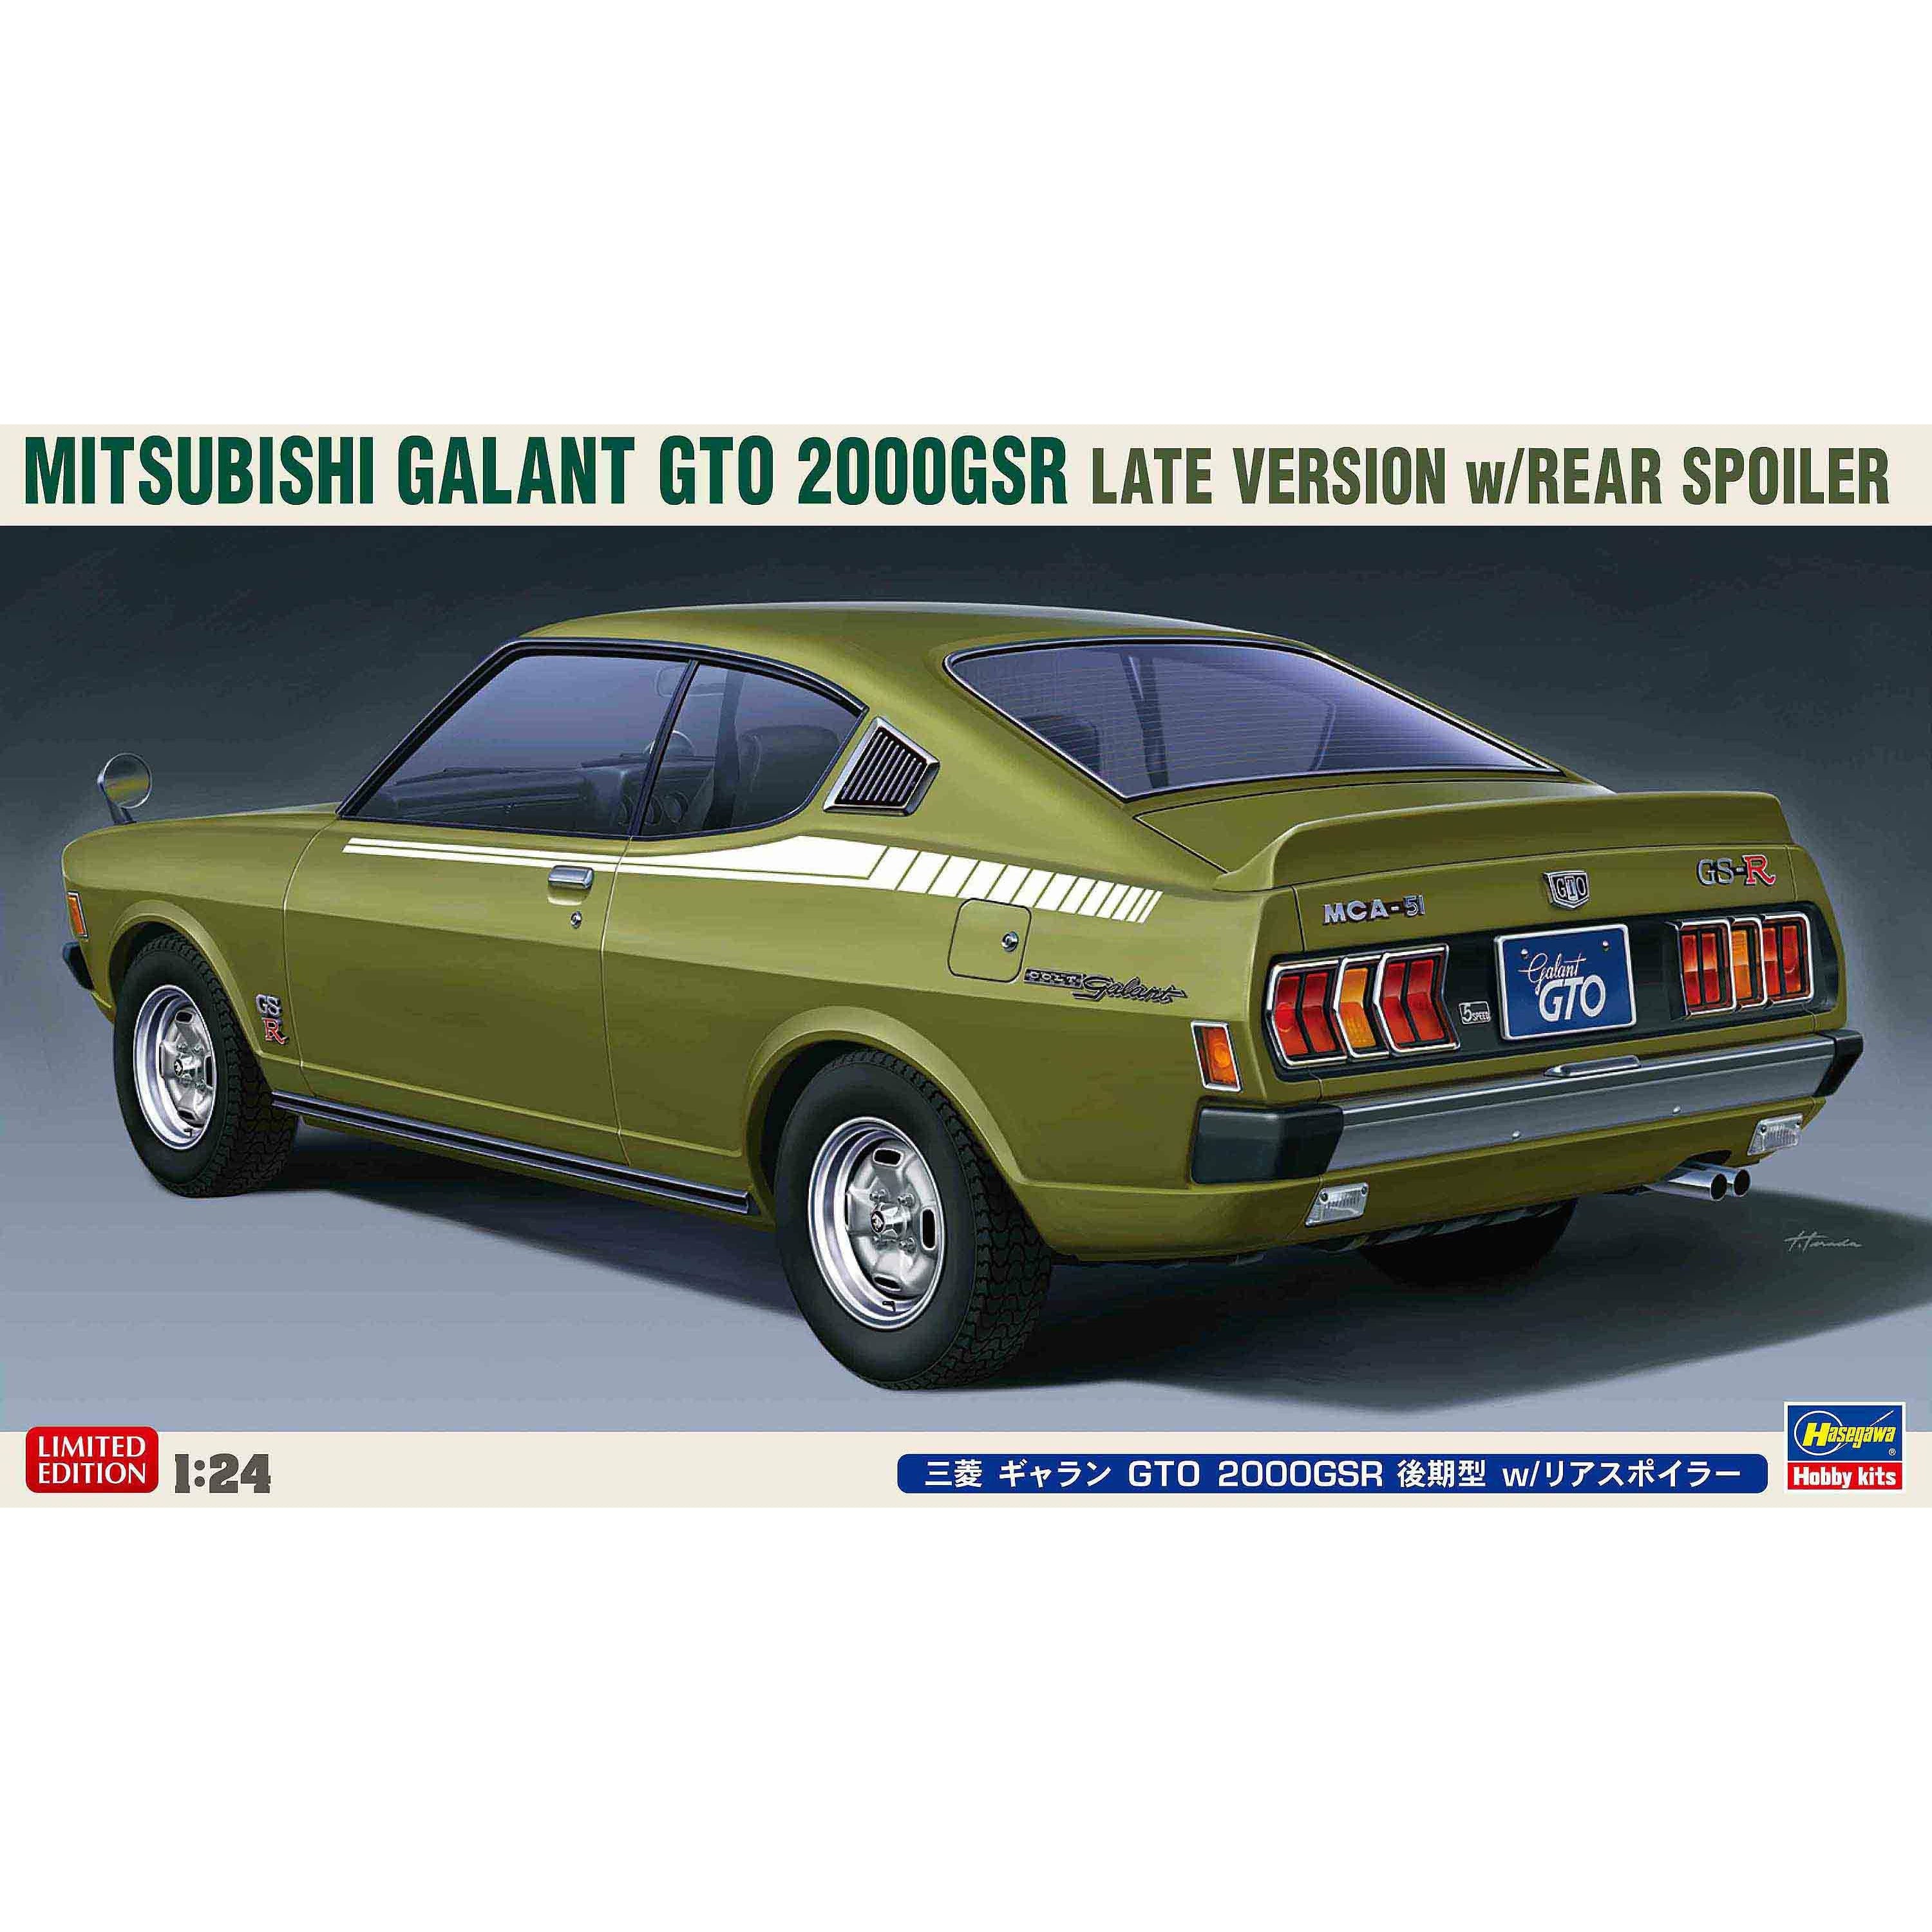 Mitsubishi Galant GTO 2000GSR Late Version w/Rear Spoiler 1/24 Model Car Kit #20554 by Hasegawa